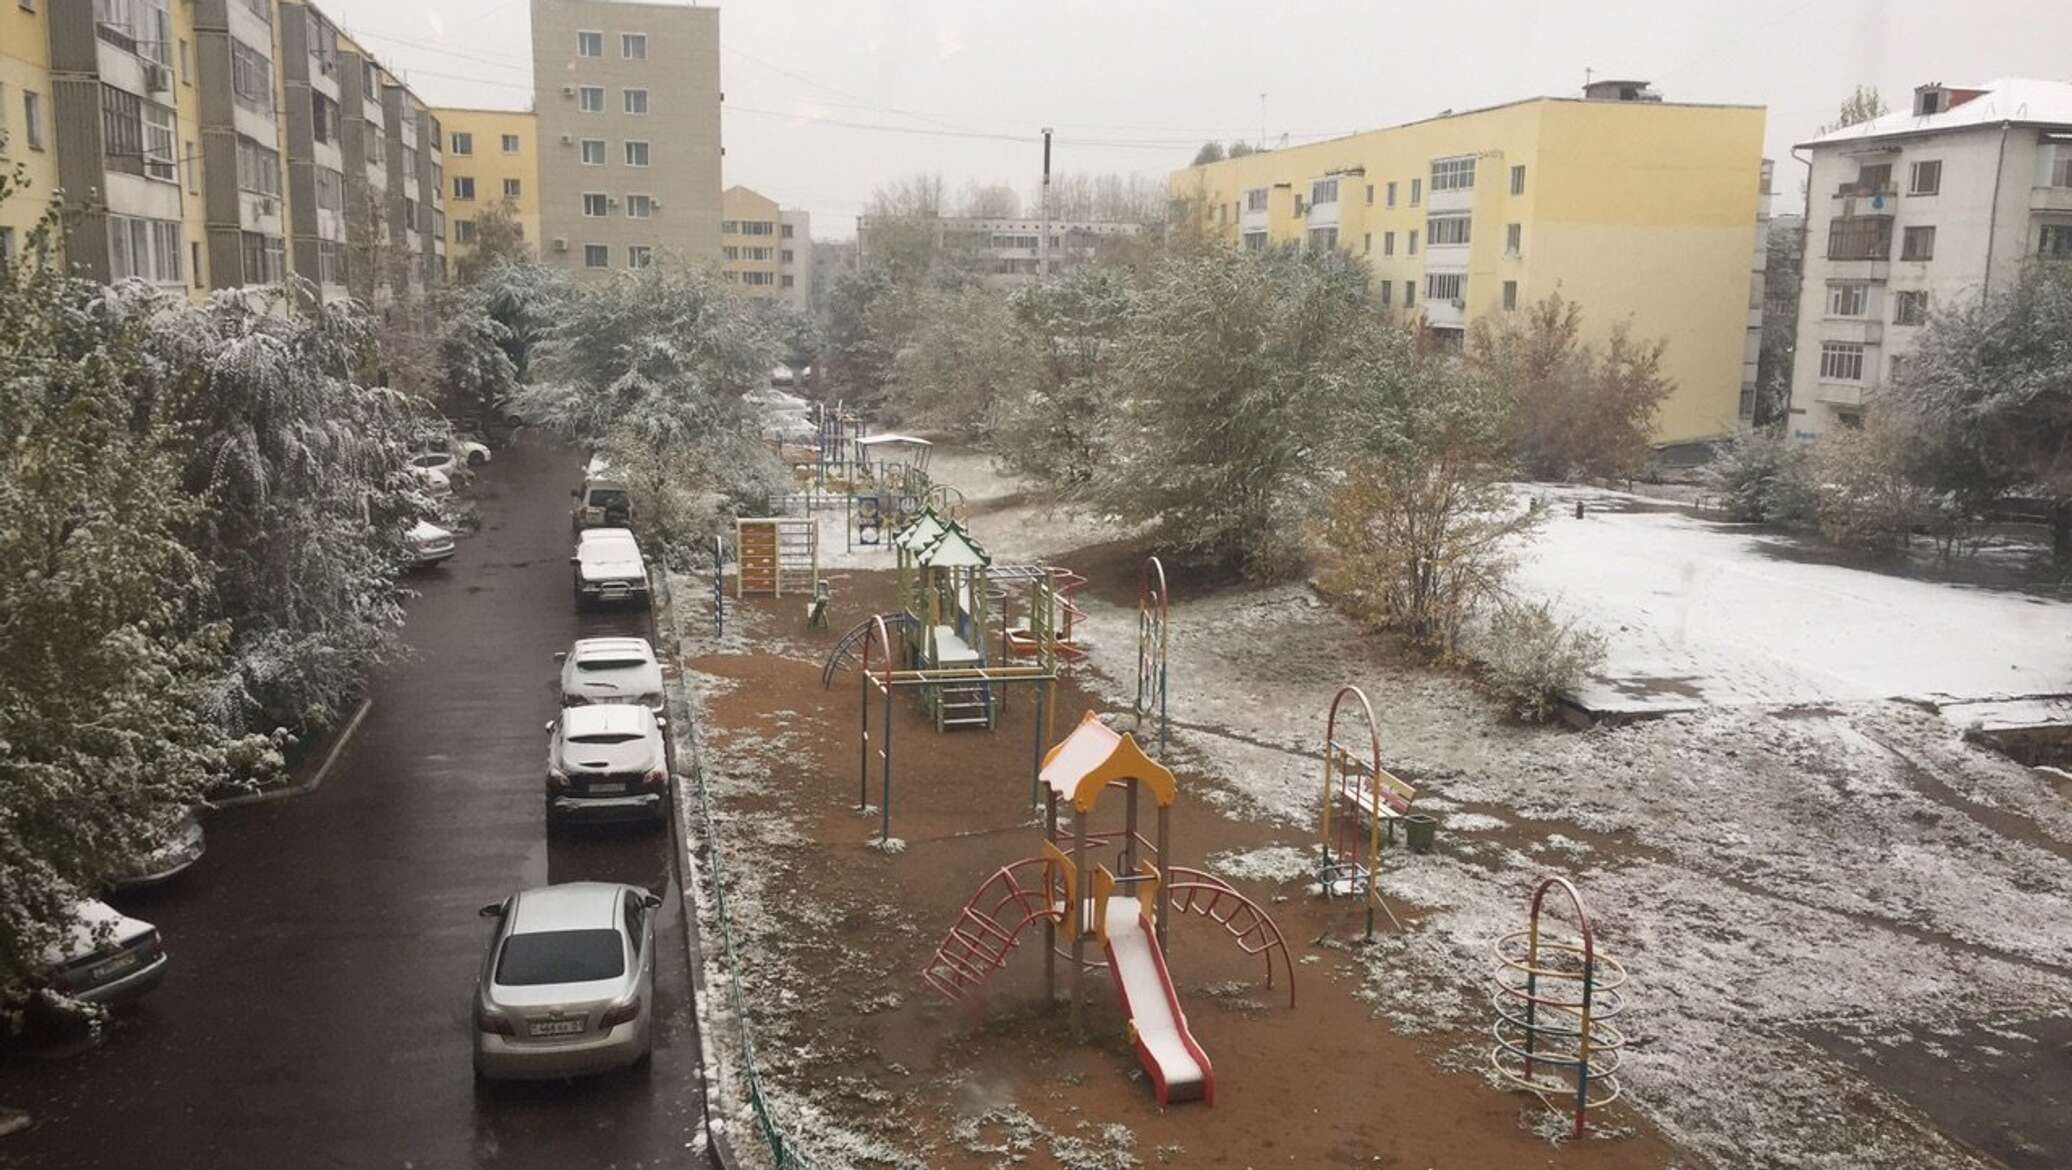 Астана погода какая. Астана снег. Астана климат. Погода в Казахстане сегодня Астана. Казахстан погода сейчас Астана.